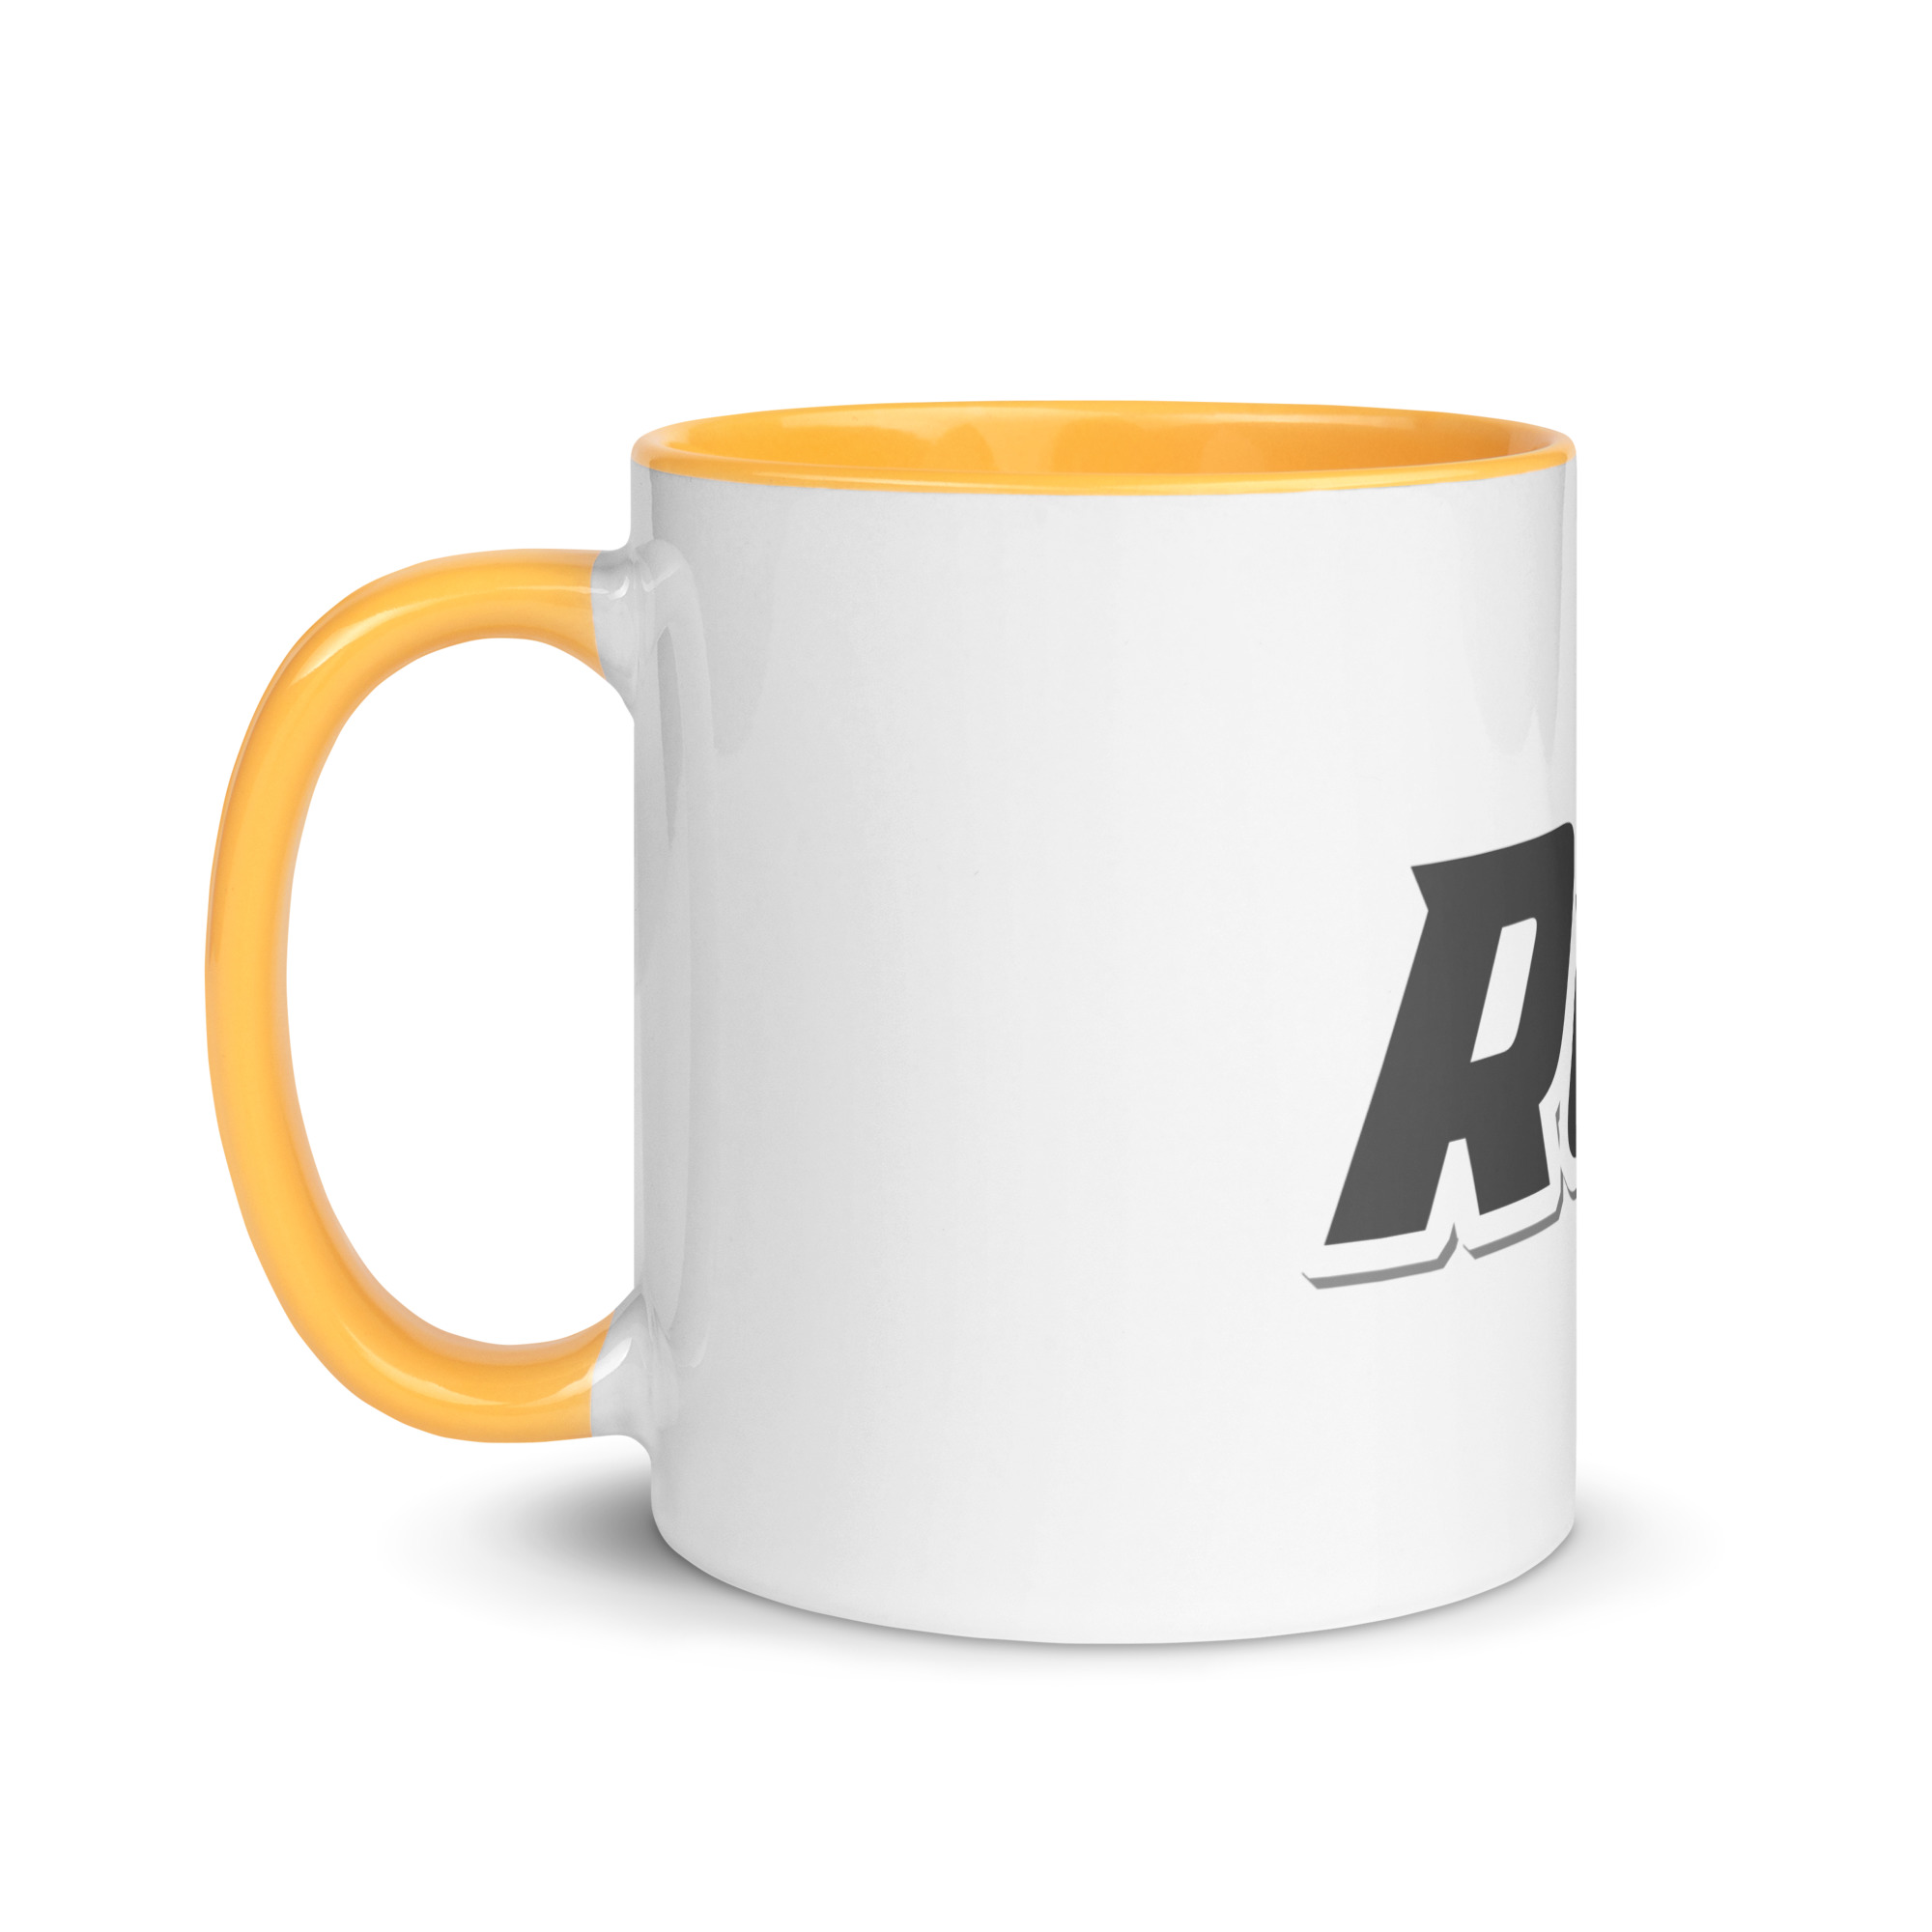 white-ceramic-mug-with-color-inside-golden-yellow-11-oz-left-6525b6484cae3.jpg